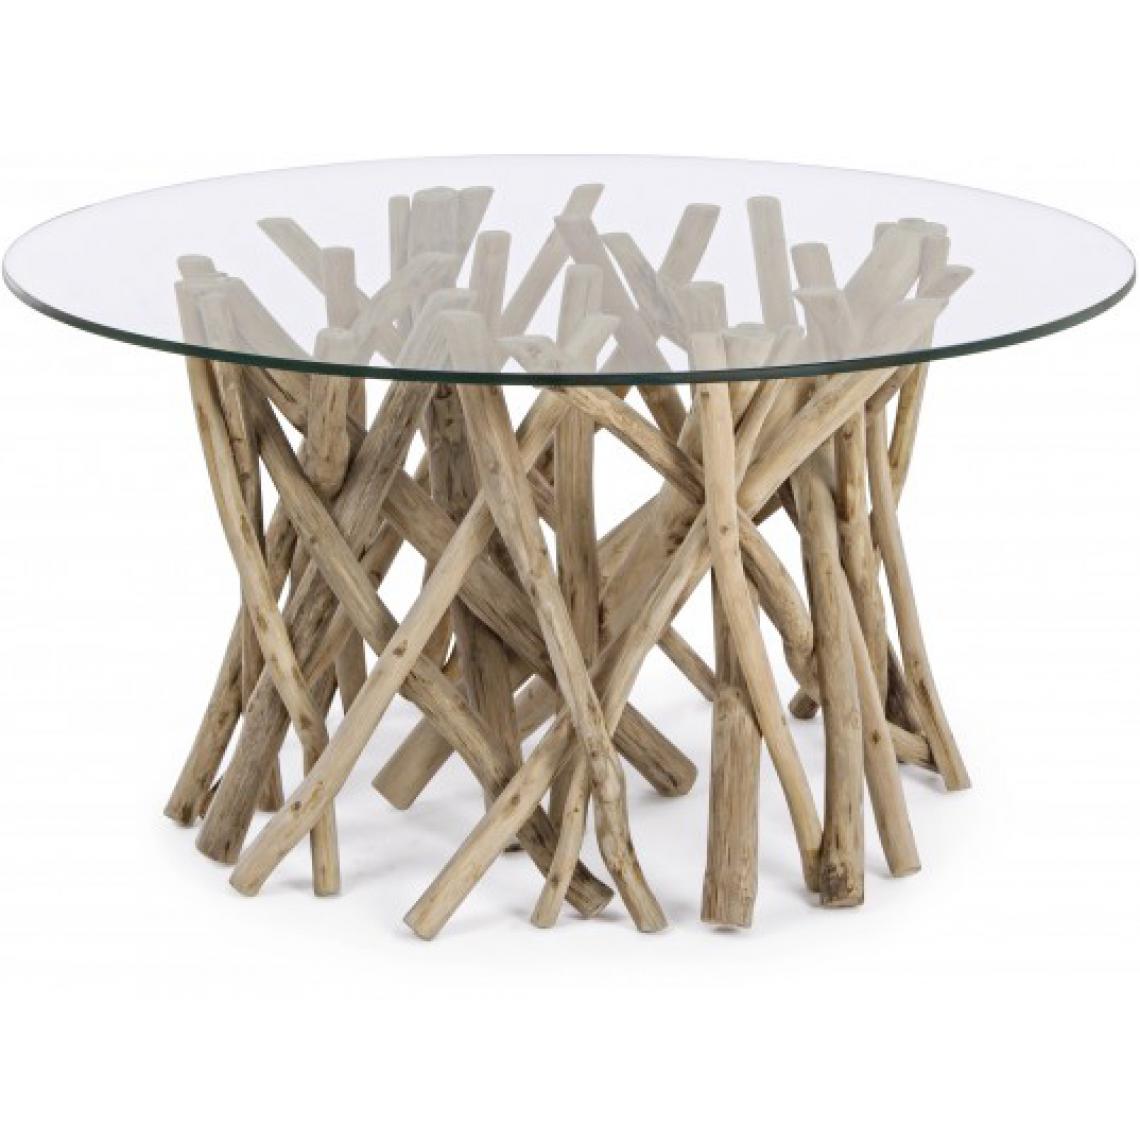 Bizzotto - Table basse Table basse Samira plateau verre diamètre 80 cm - Tables basses